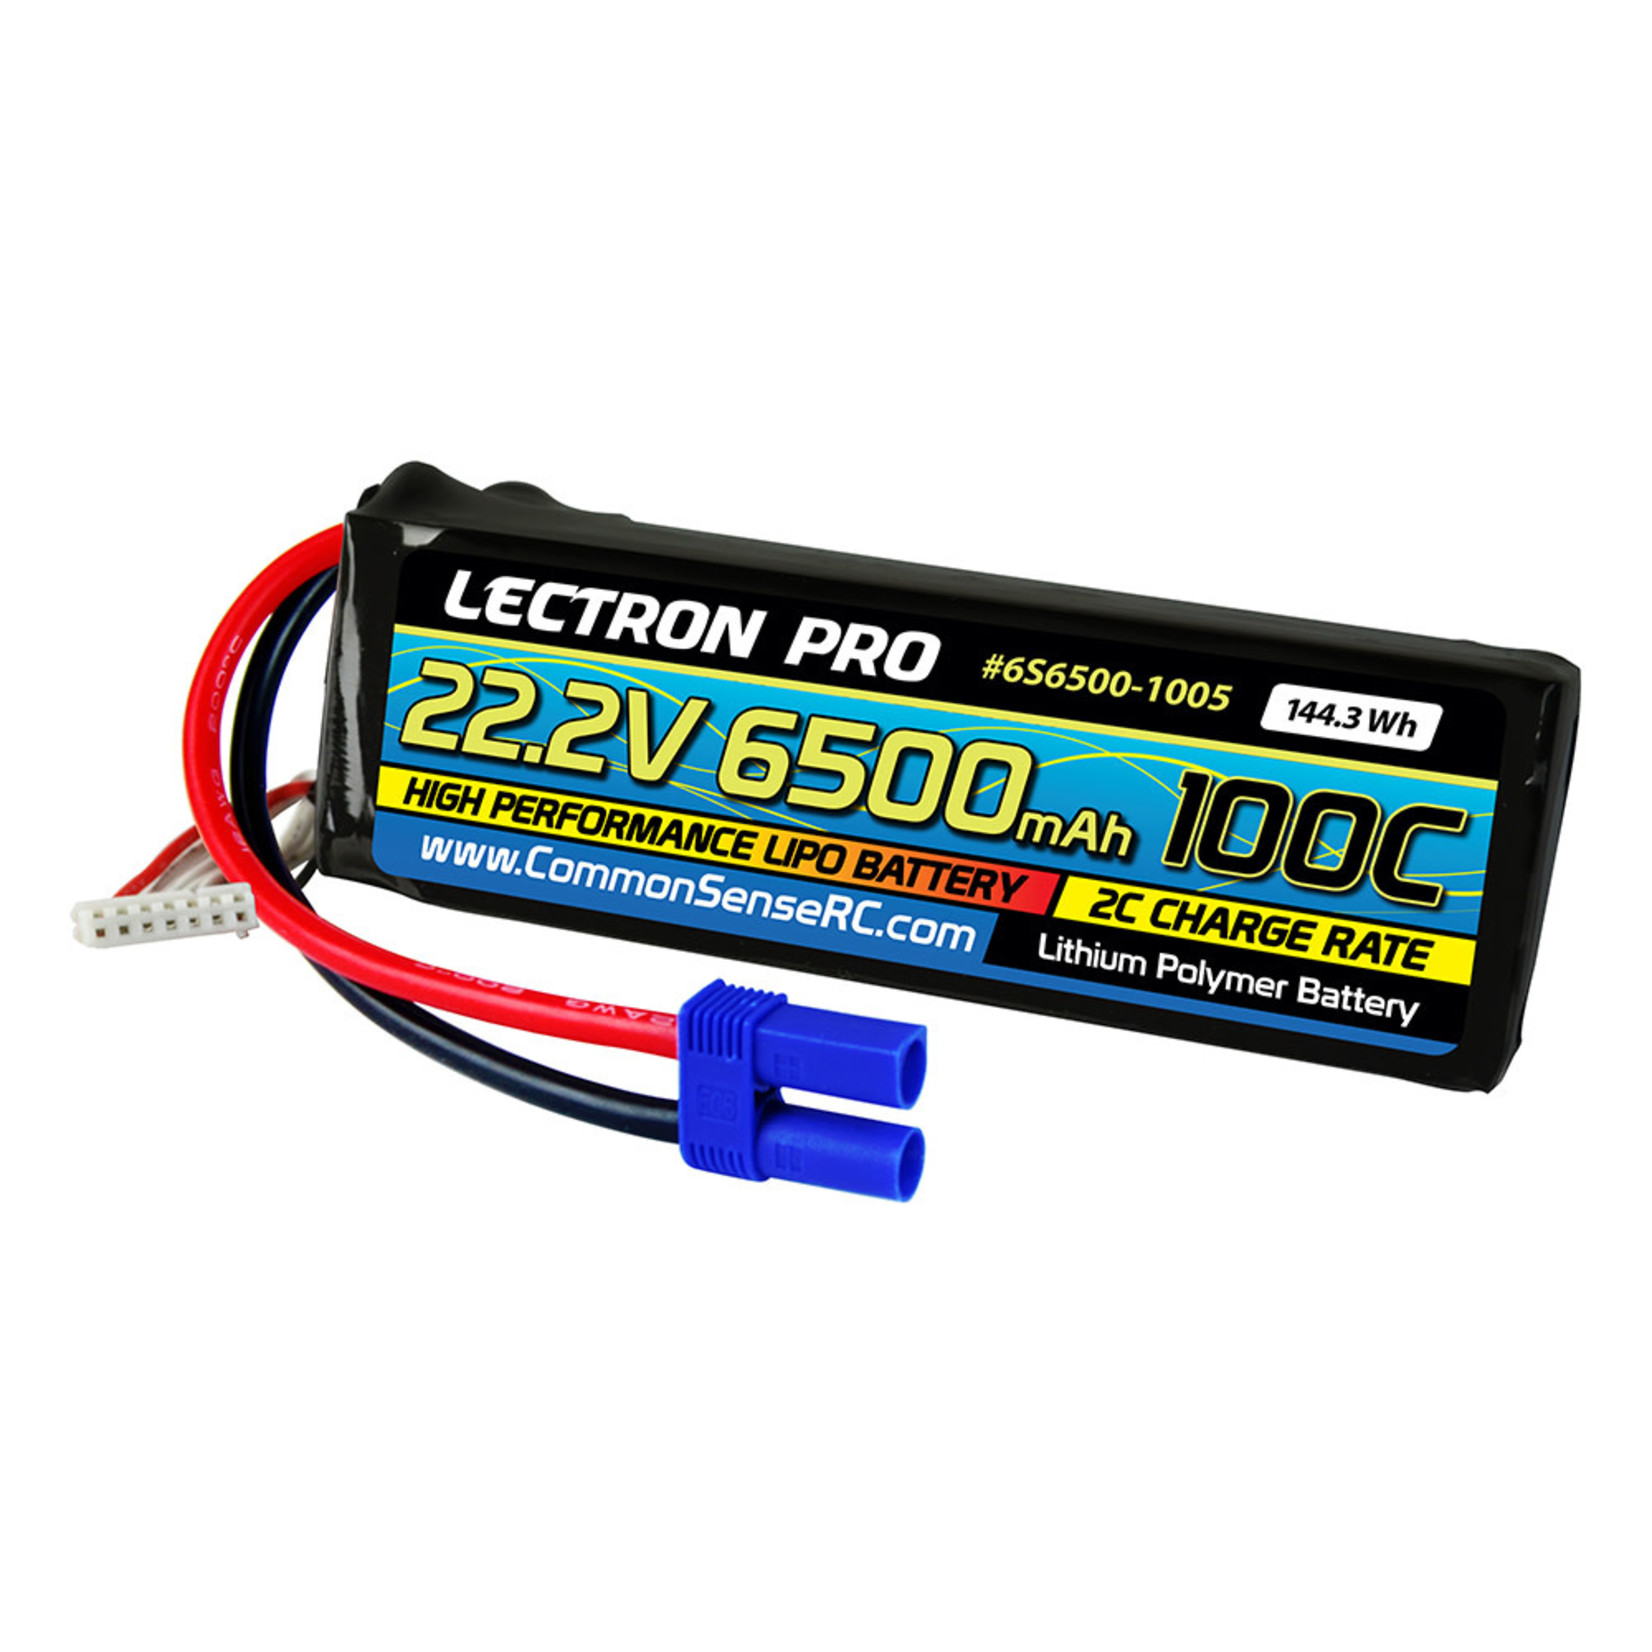 Lectron Pro 6S6500-1005 Lectron Pro 22.2V 6500mAh 100C EC5